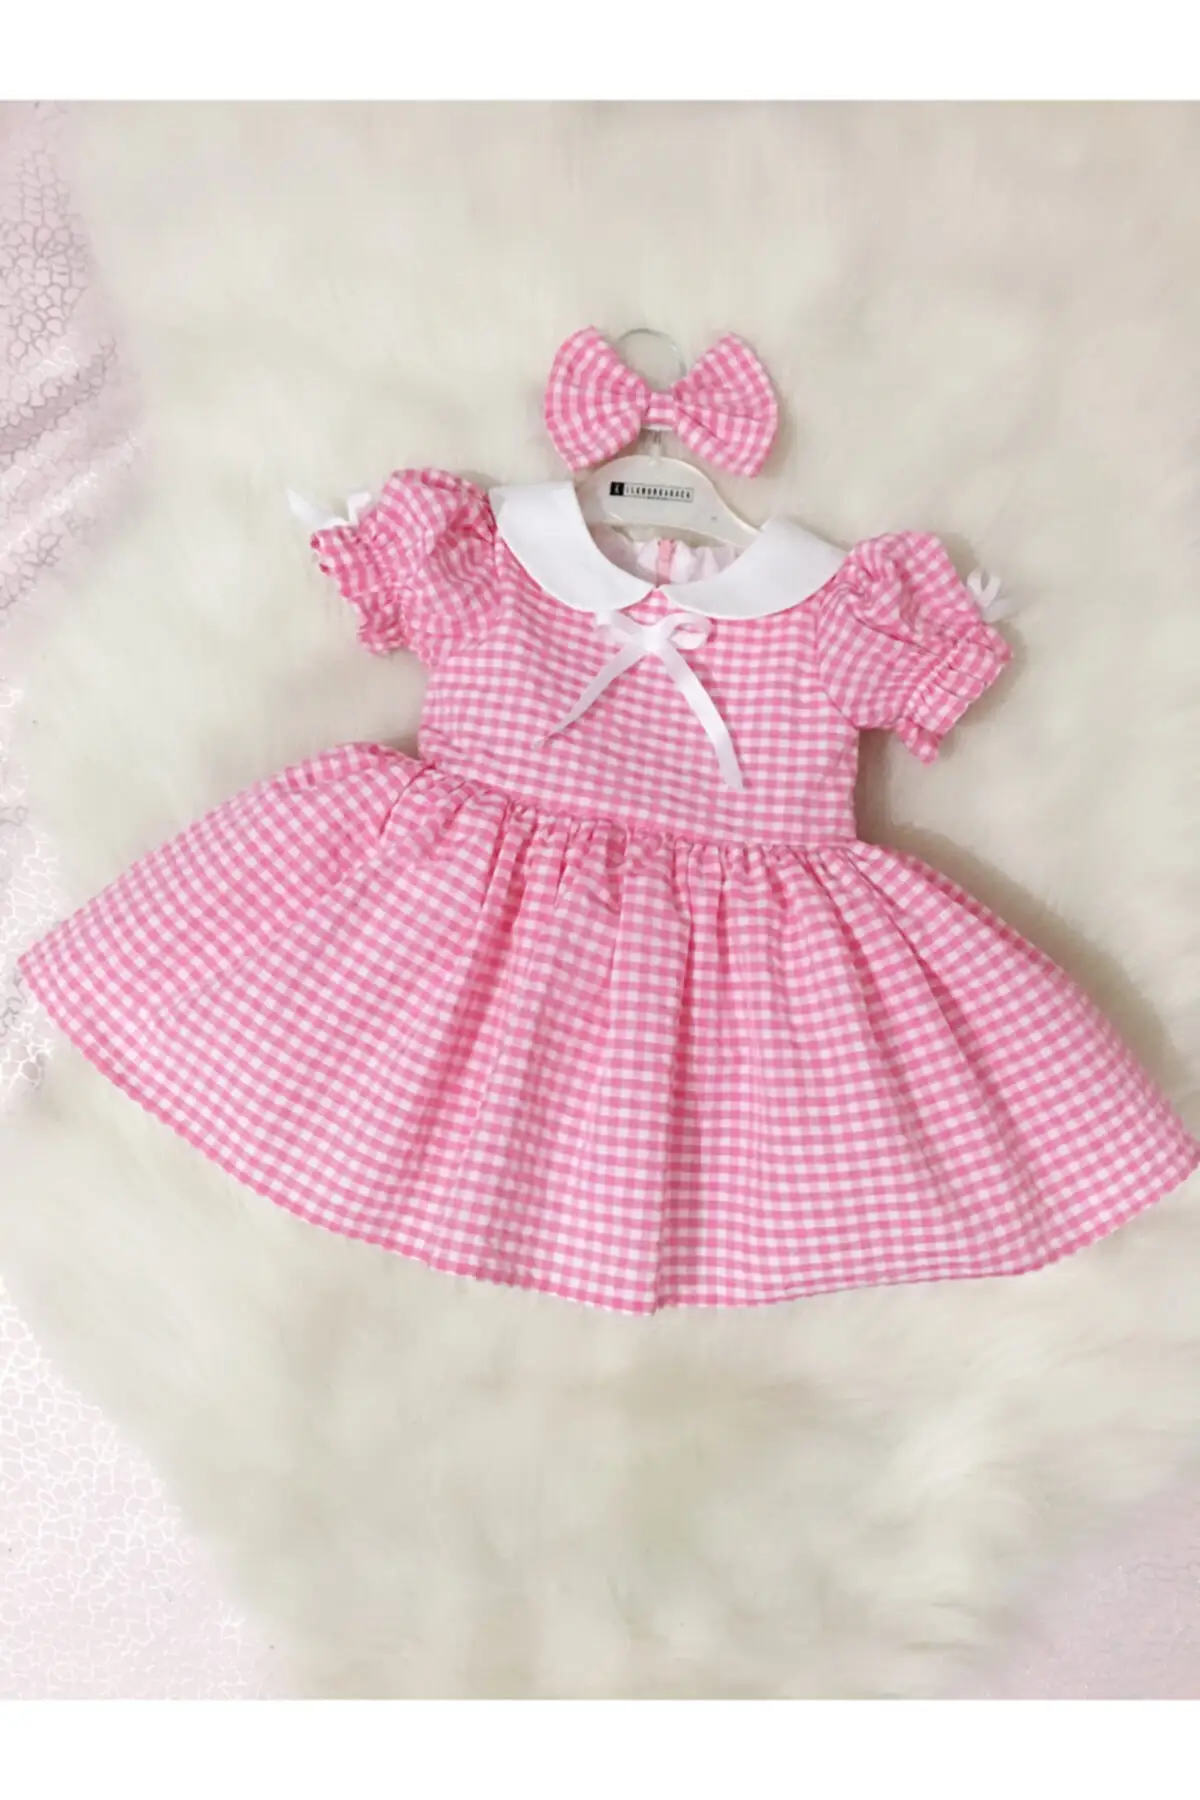 Pink gingham dress clothing